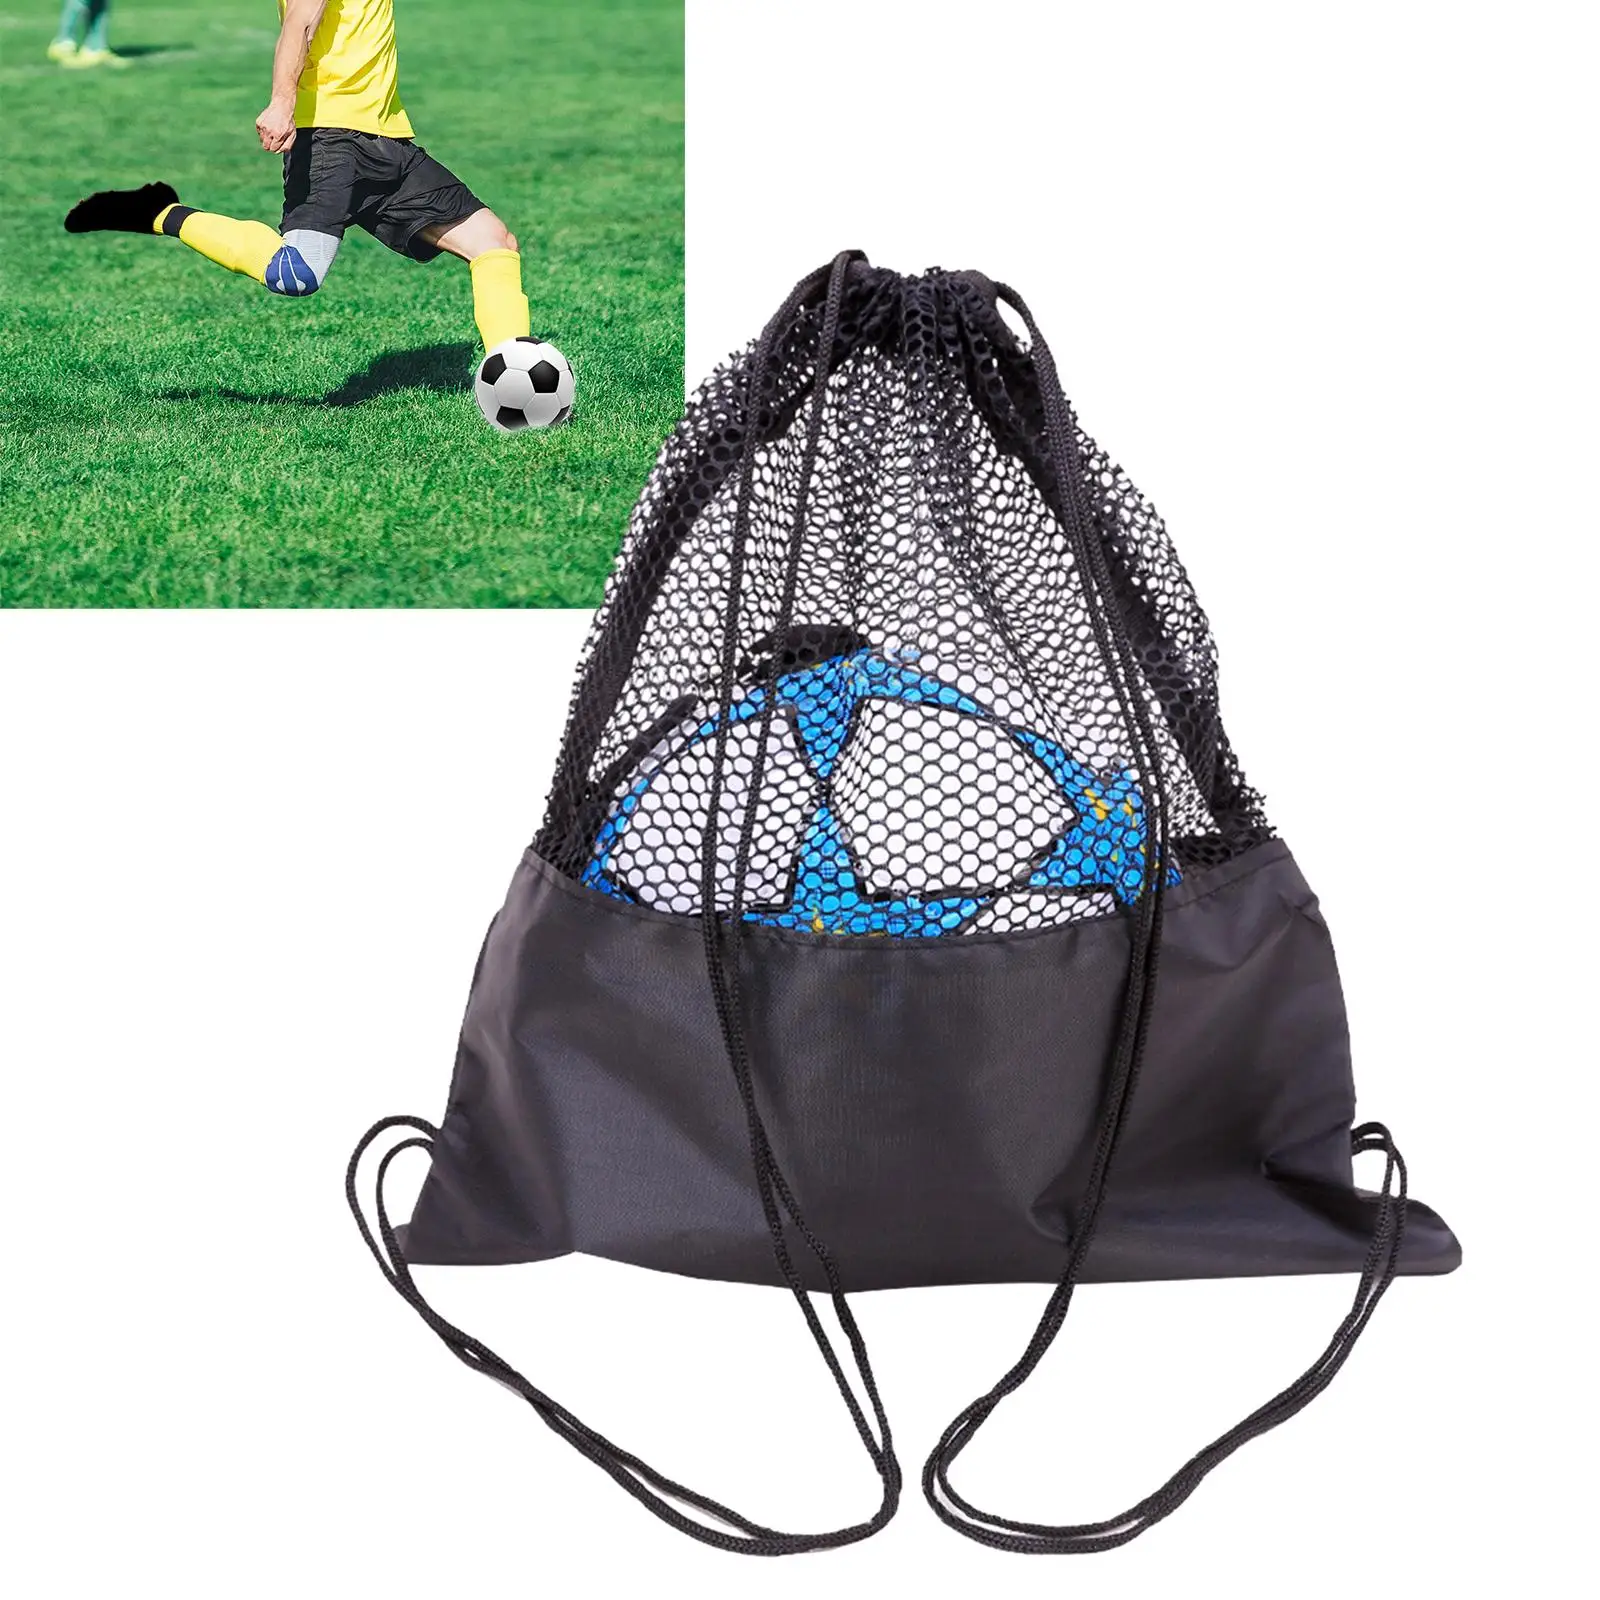 Basketball Mesh Bag Rucksack Wear Resistant Drawstring Backpack Sports Ball Carry Bag for Softball Yoga Swimming Traveling Dance